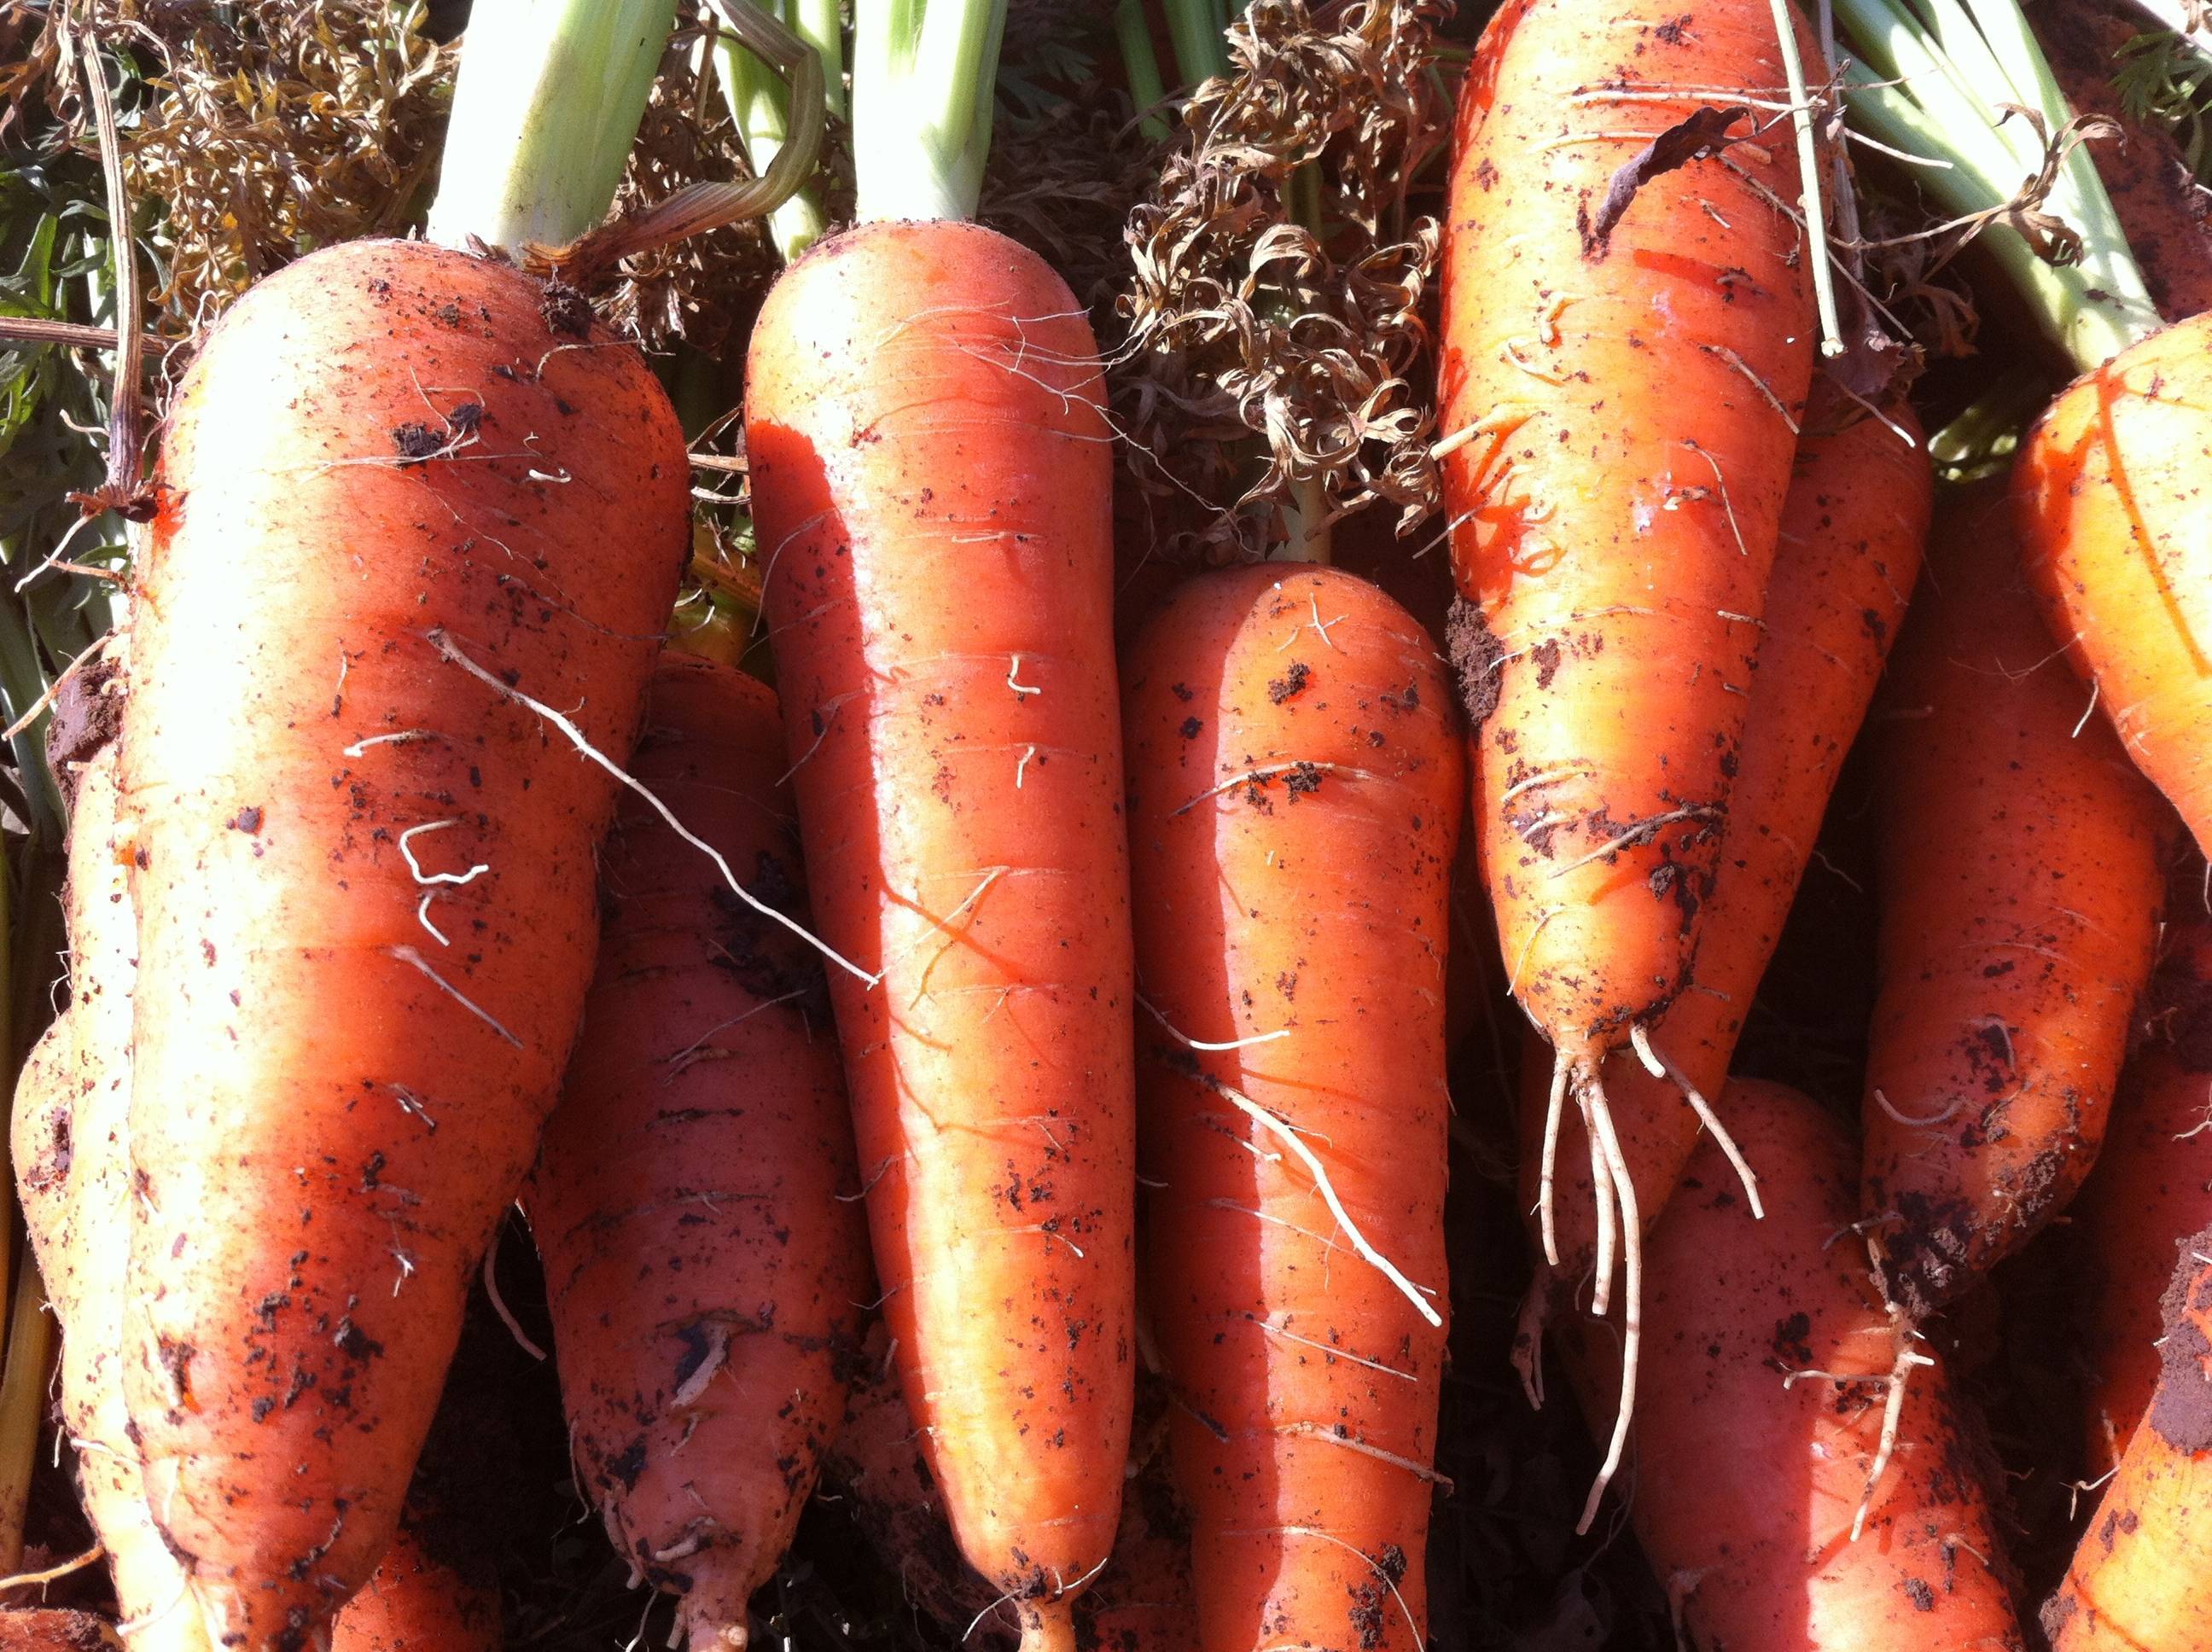 Морковь абако f1: описание сорта, посадка и уход